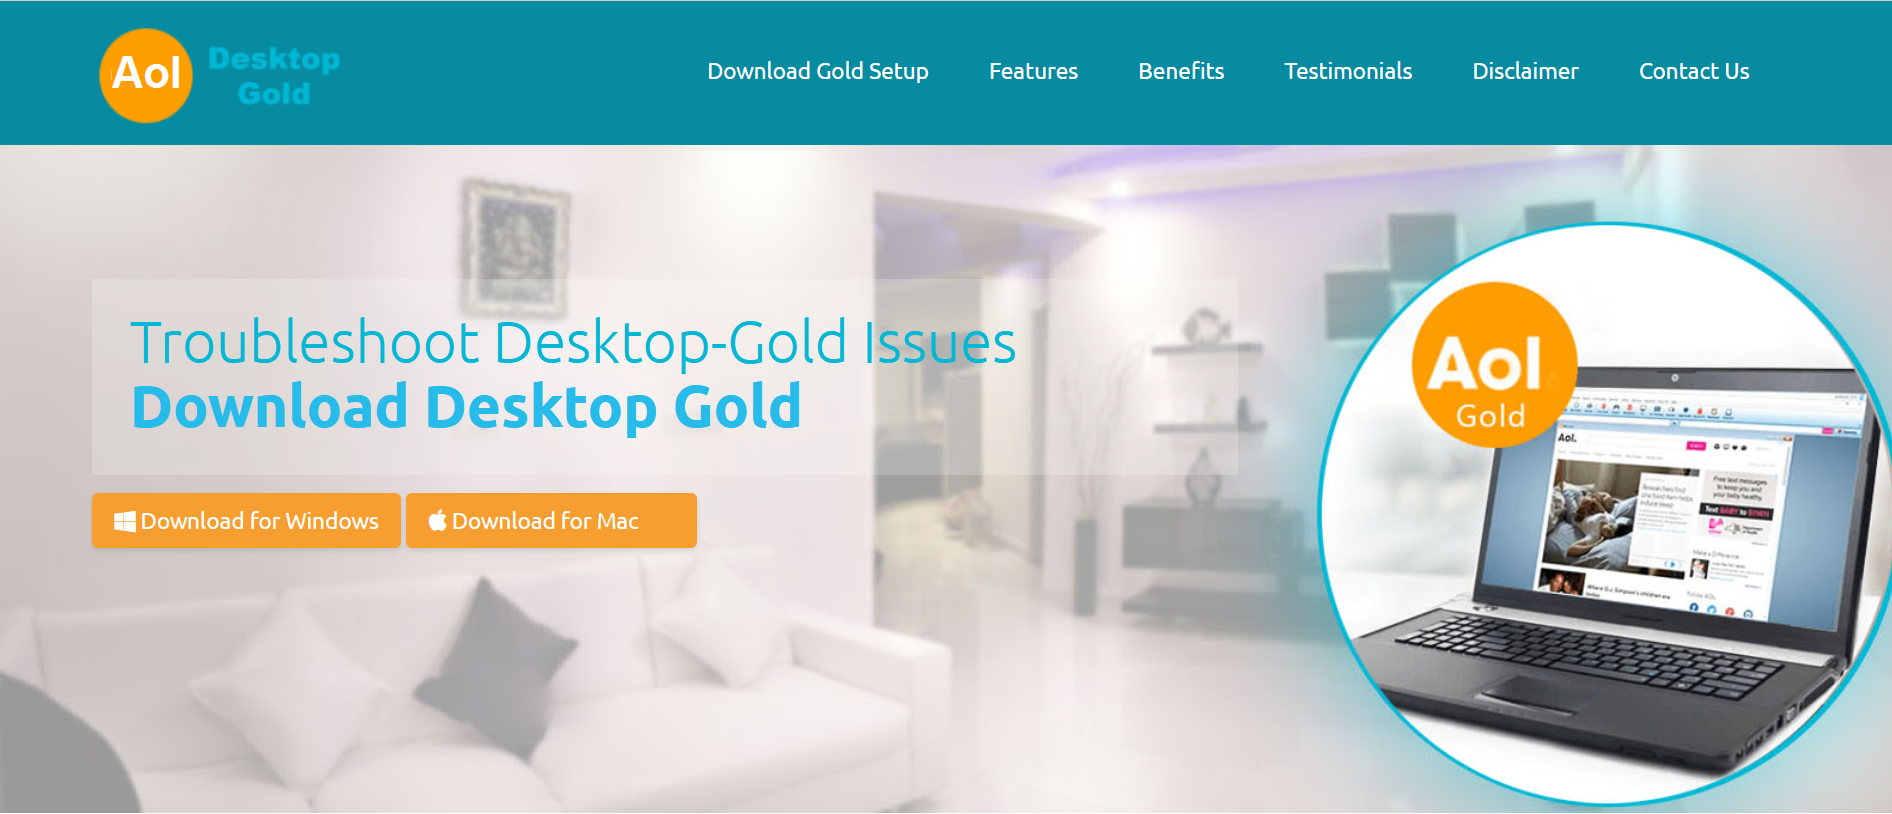 aol-desktop-gold-download